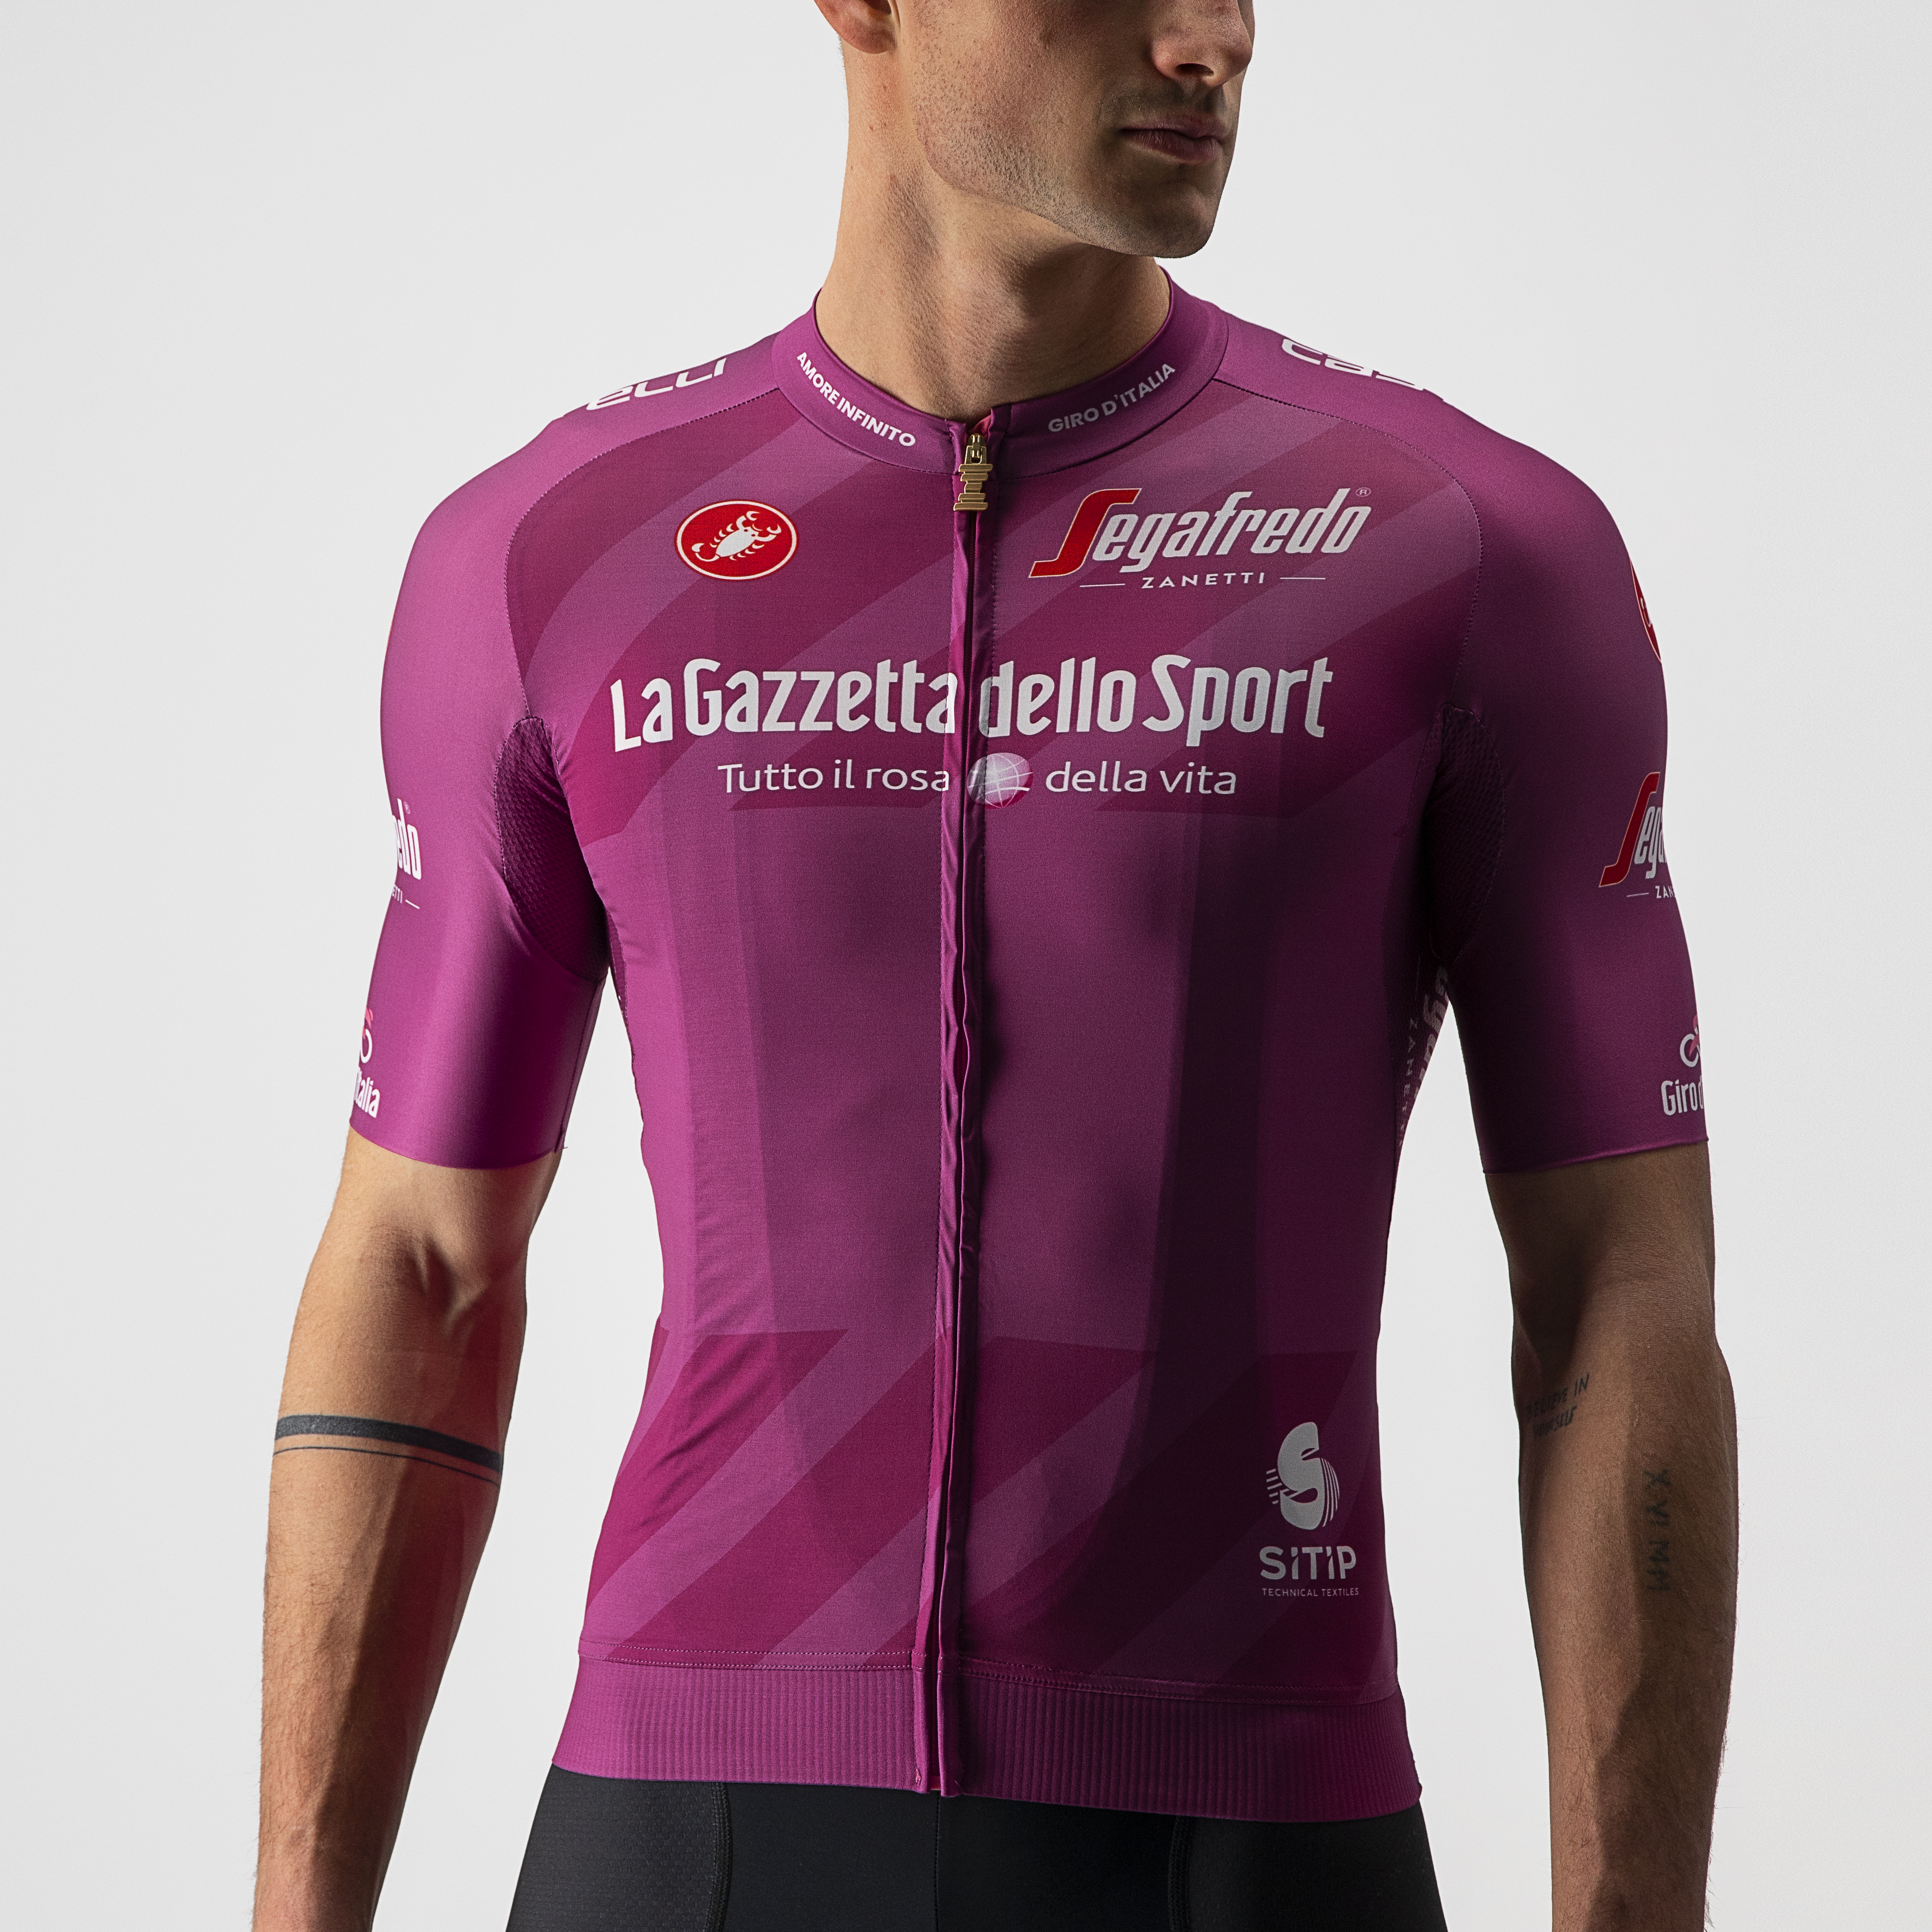 Maglia ciclamino Giro d'Italia 2021